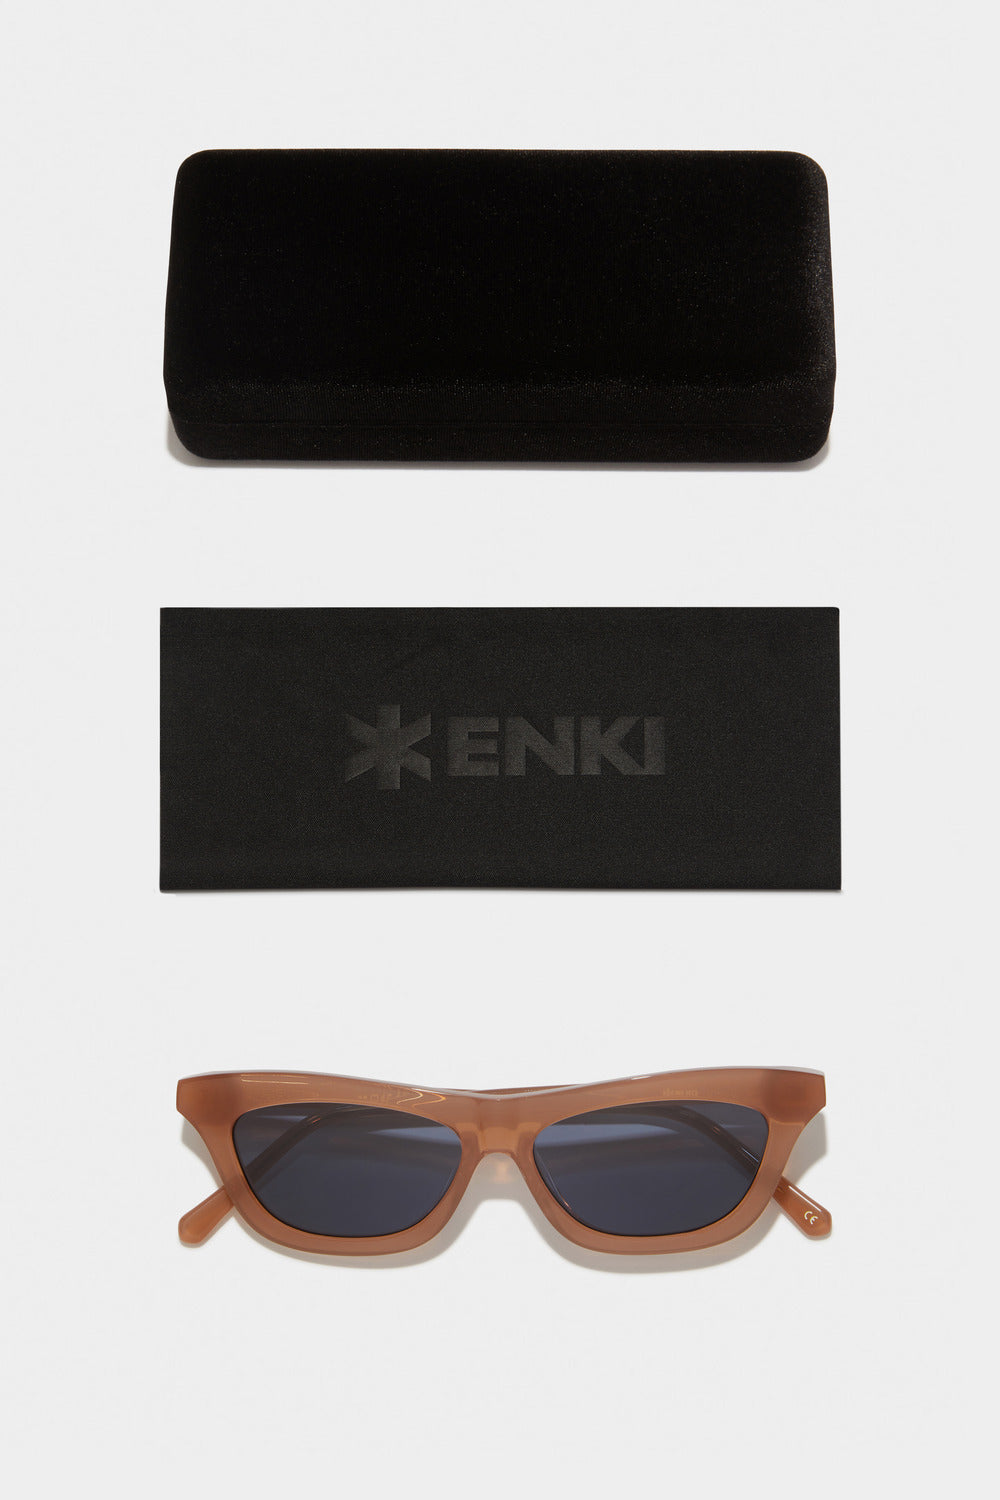 www.enkieyewear.com Brizo Men’s and Women’s Sunglasses